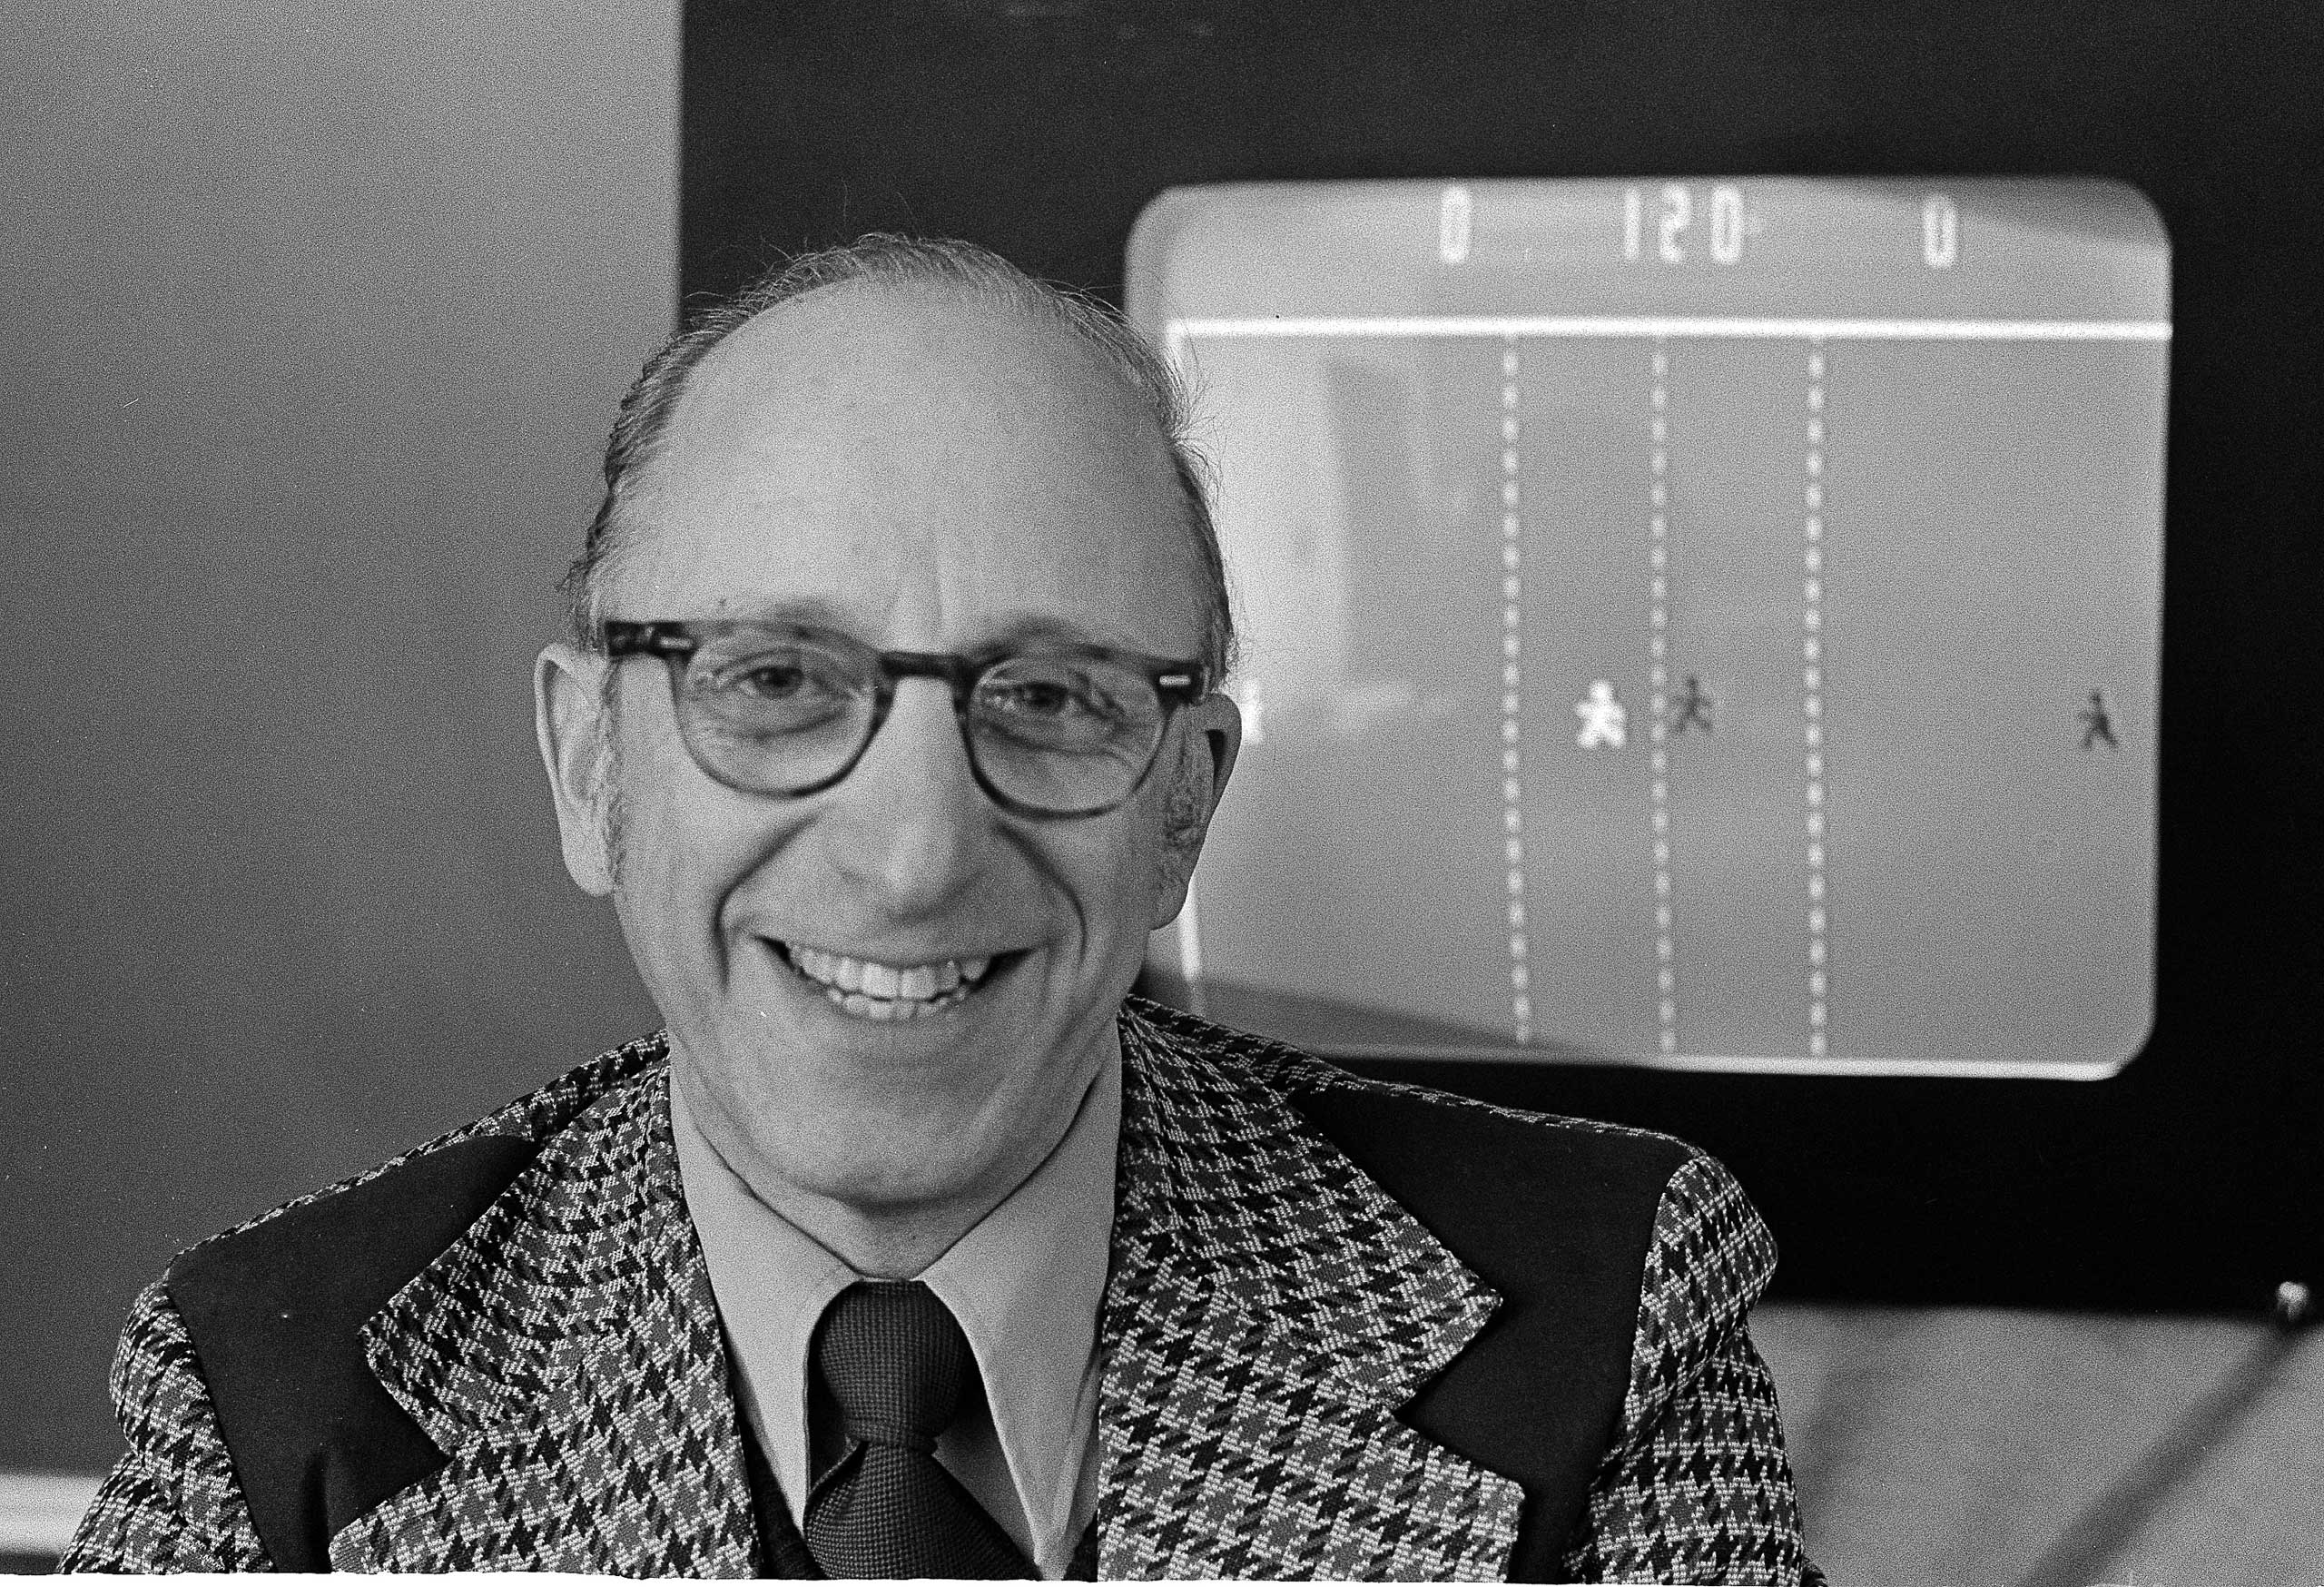 Ralph Baer an engineer for Sanders Associates, Inc., of Nashua, N.H. watches his TV hockey game on Feb. 3, 1977. (CM/AP)